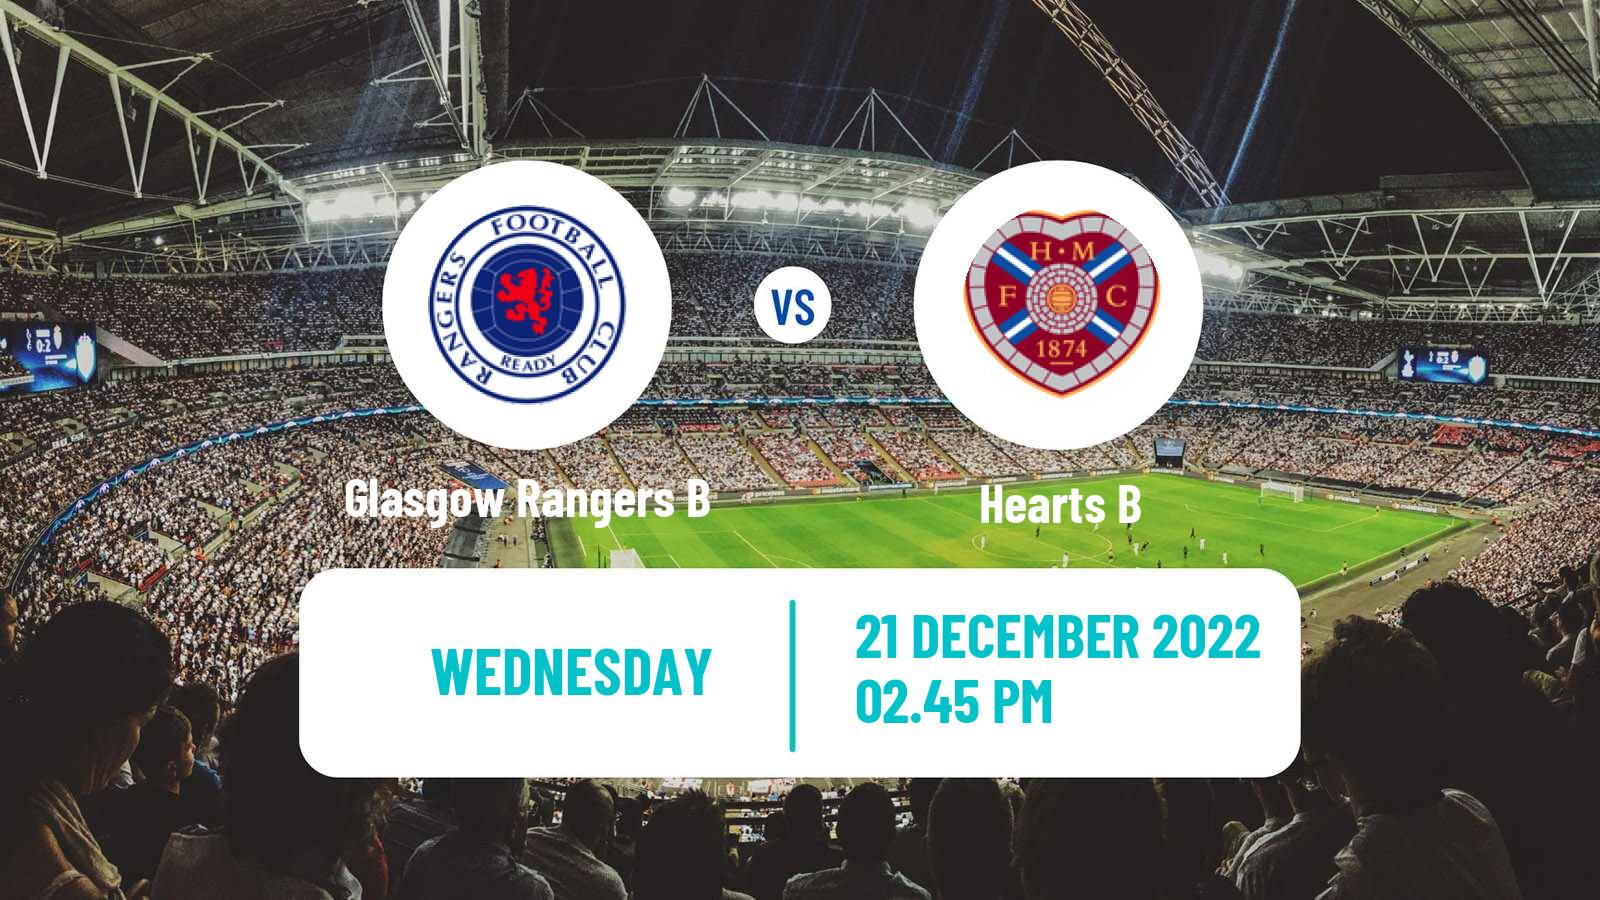 Soccer Scottish Lowland League Glasgow Rangers B - Hearts B